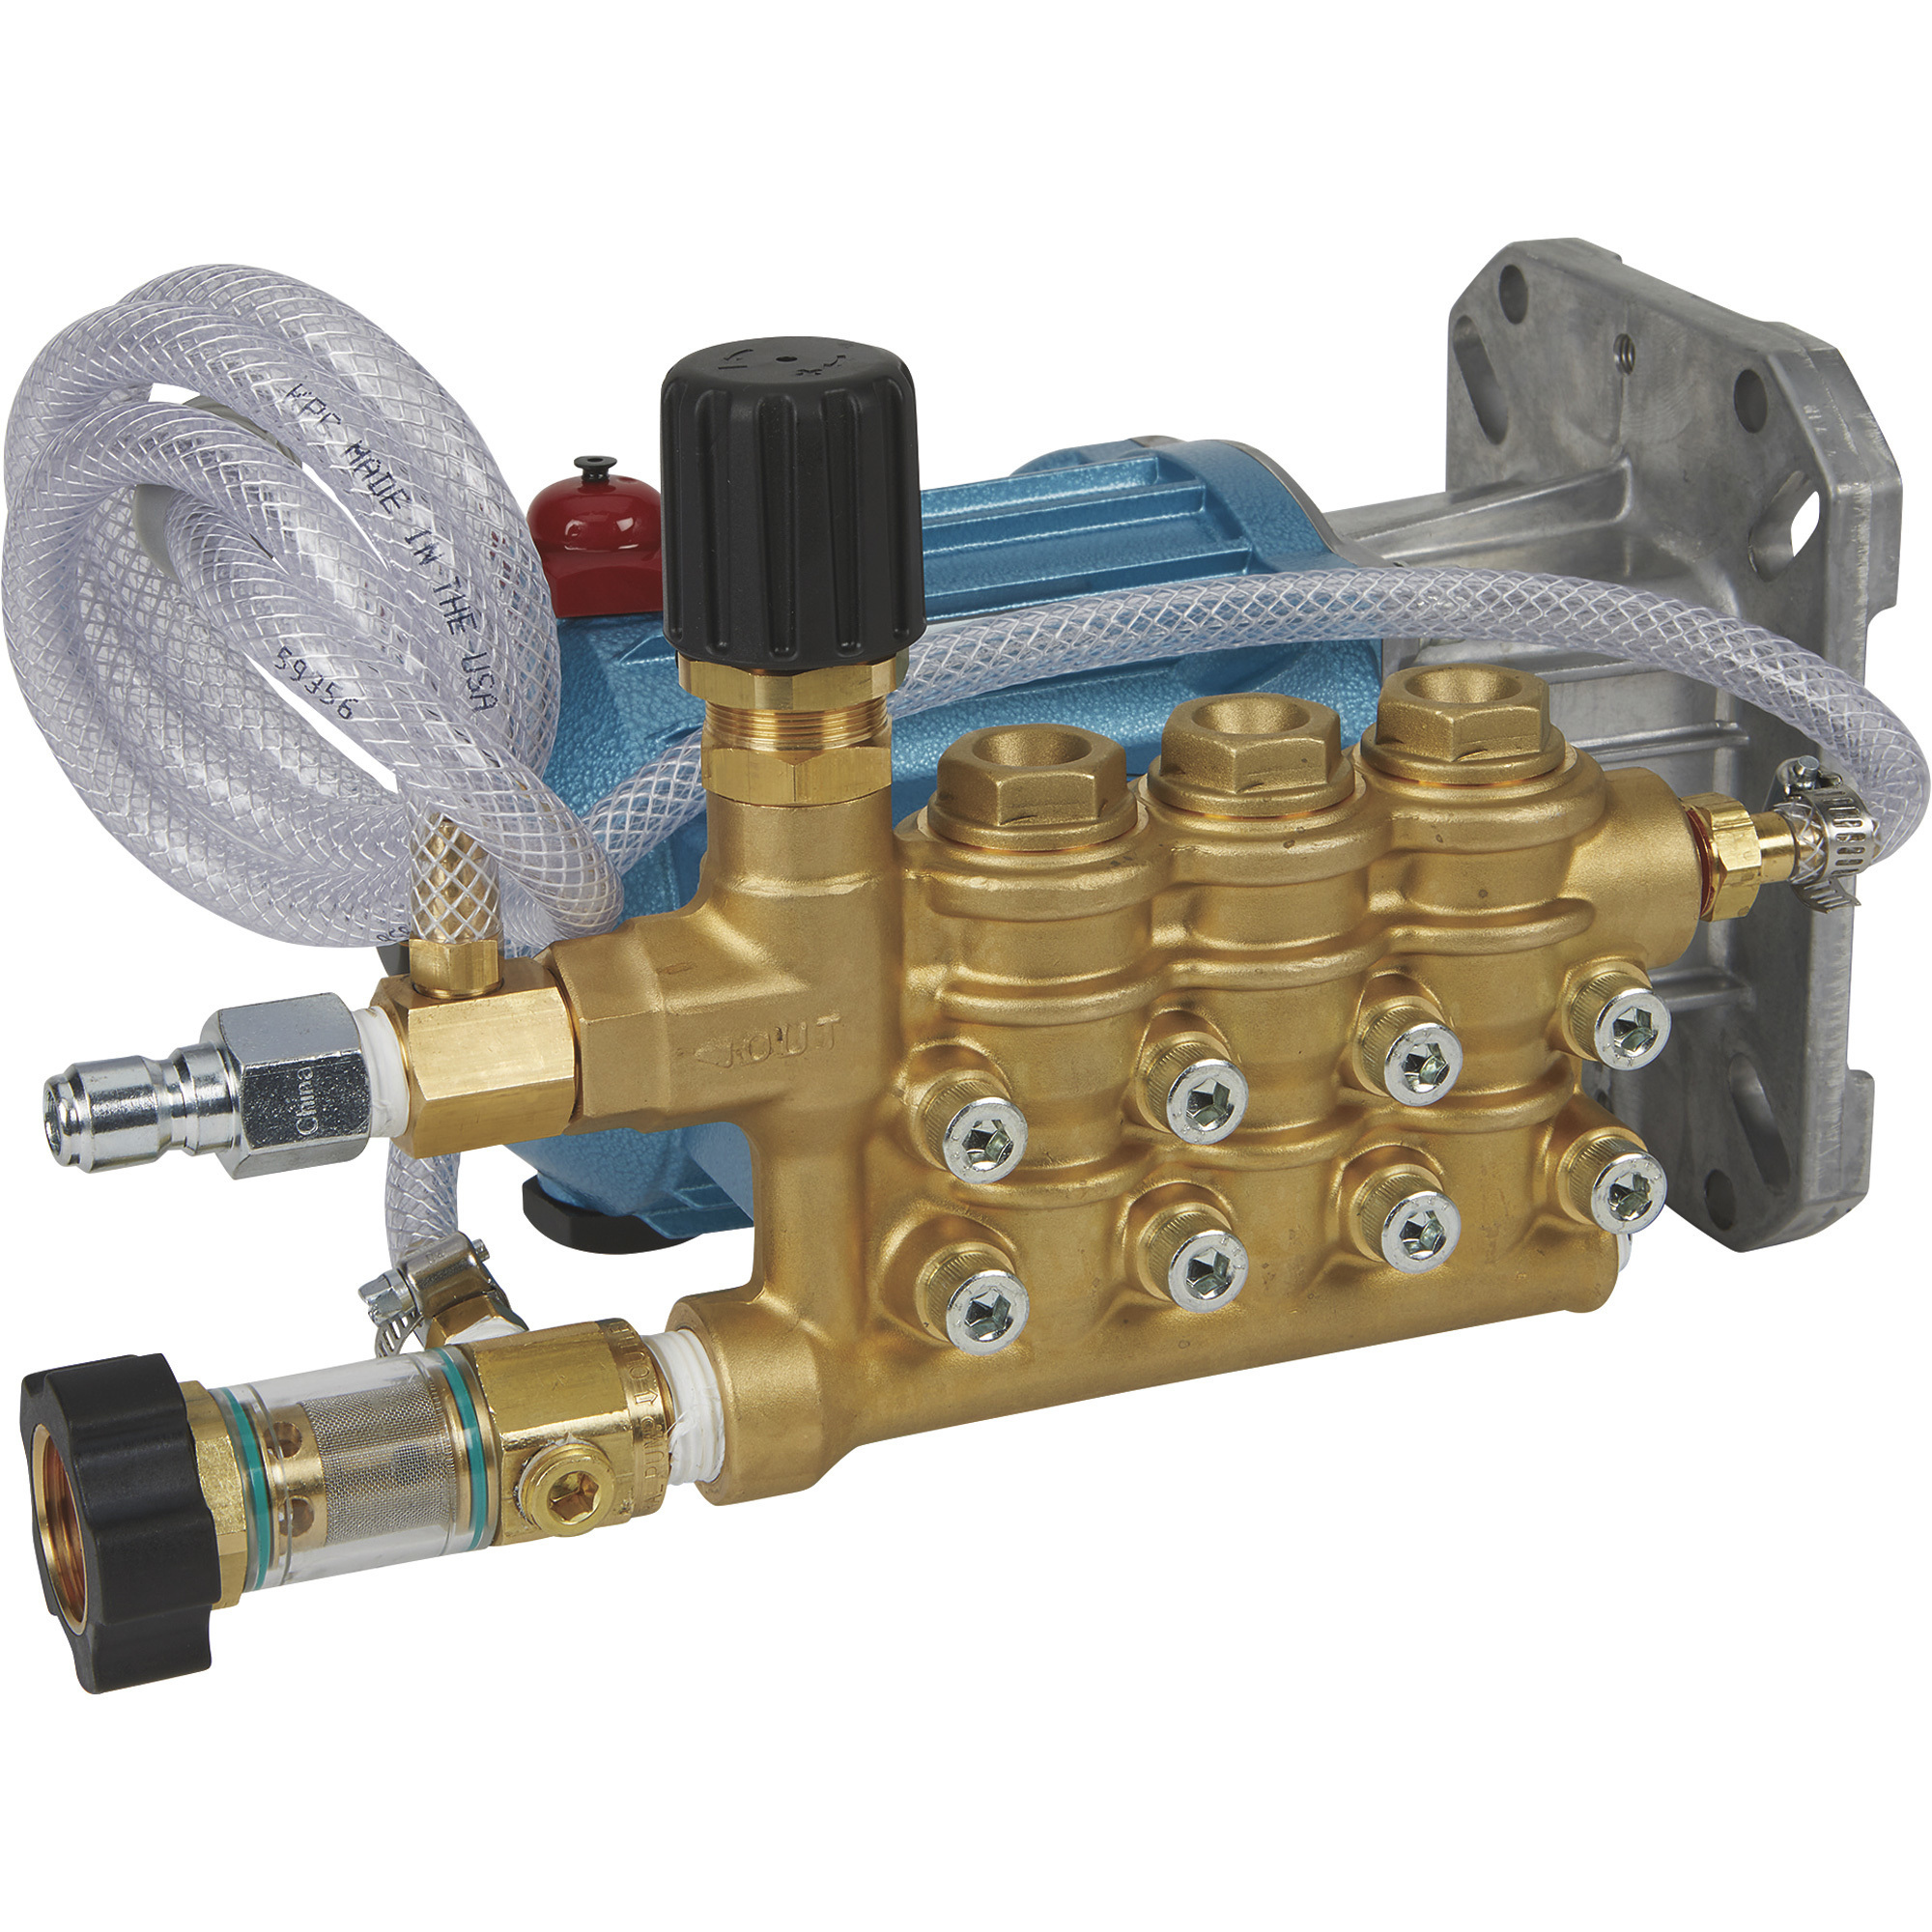 Cat Pumps Pressure Washer Pump, 4000 PSI, 4.0 GPM, Direct Drive, Gas, Model 67DX39G1L